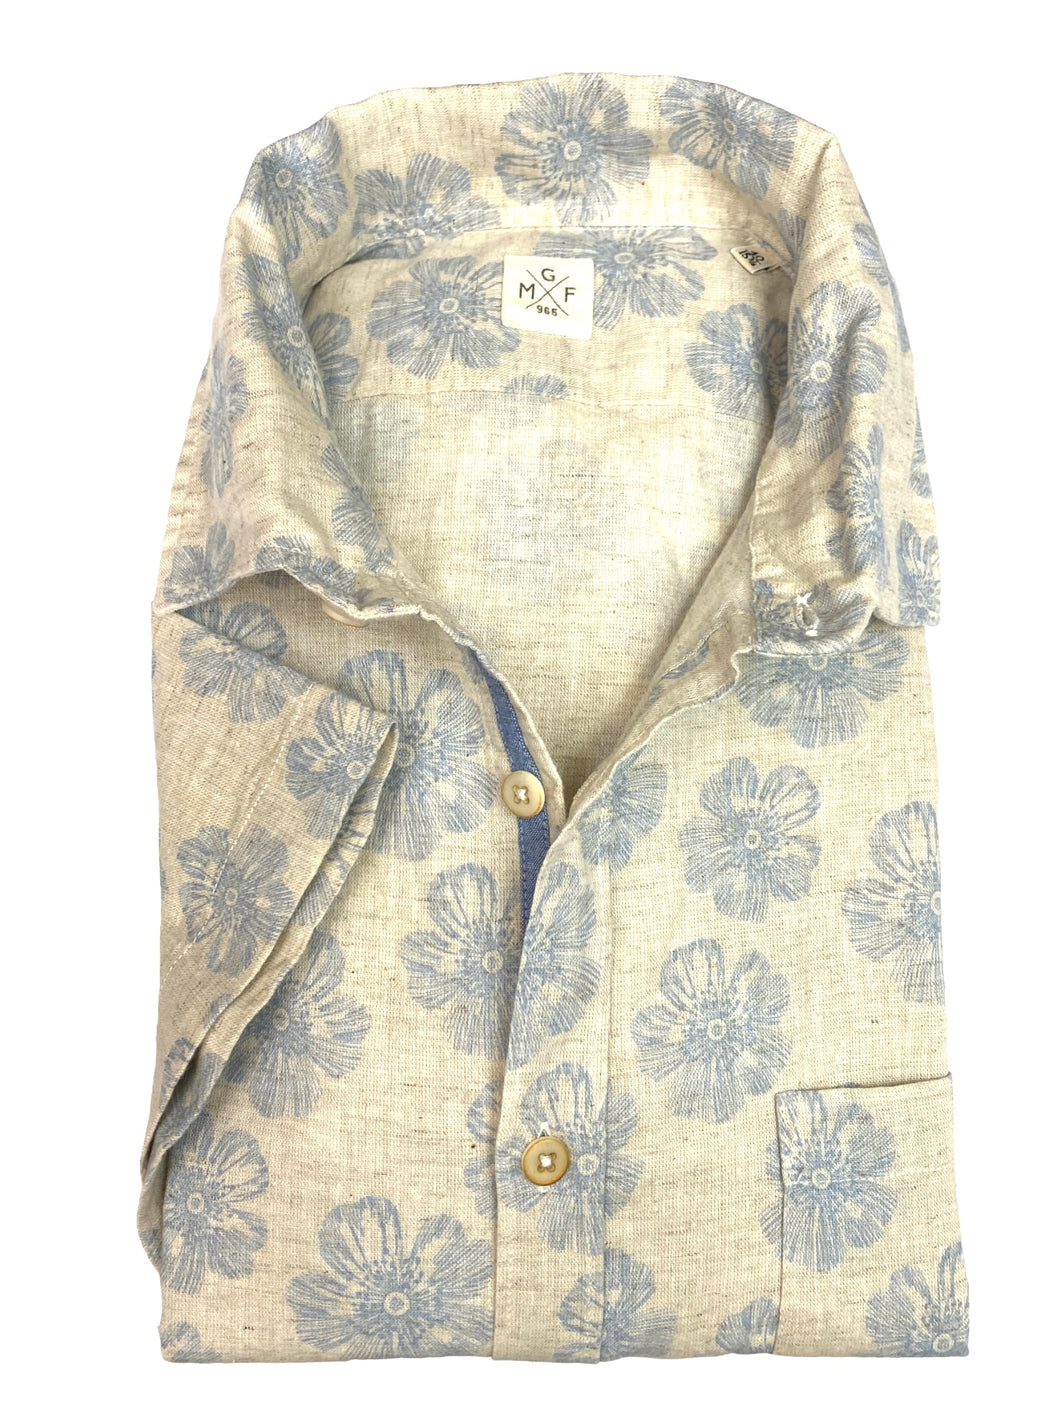 GMF 965 Short Sleeve Linen/Cotton Shirt Blue Floral